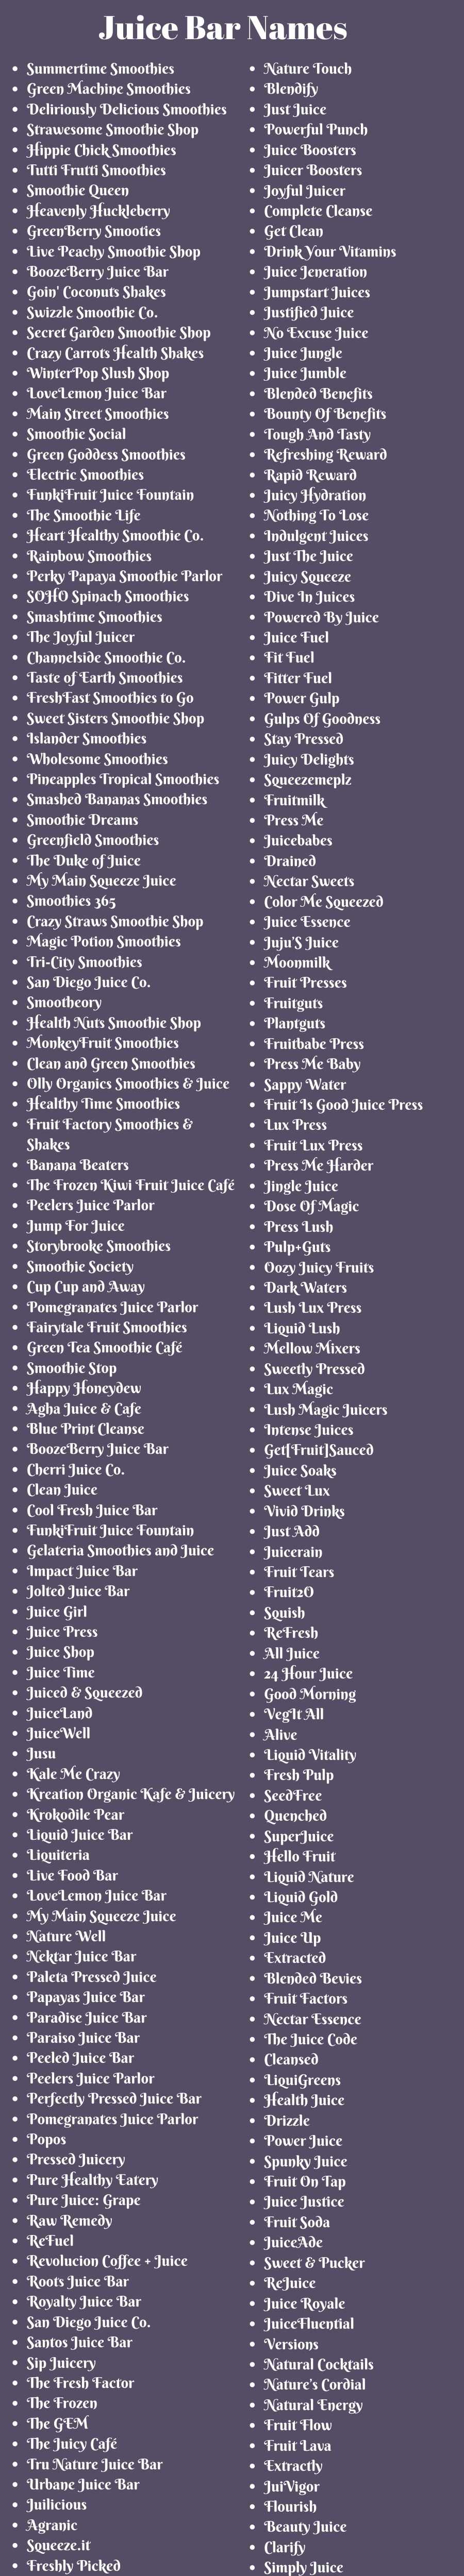 Juice Bar Names: 400+ Smoothie Shop Name Ideas